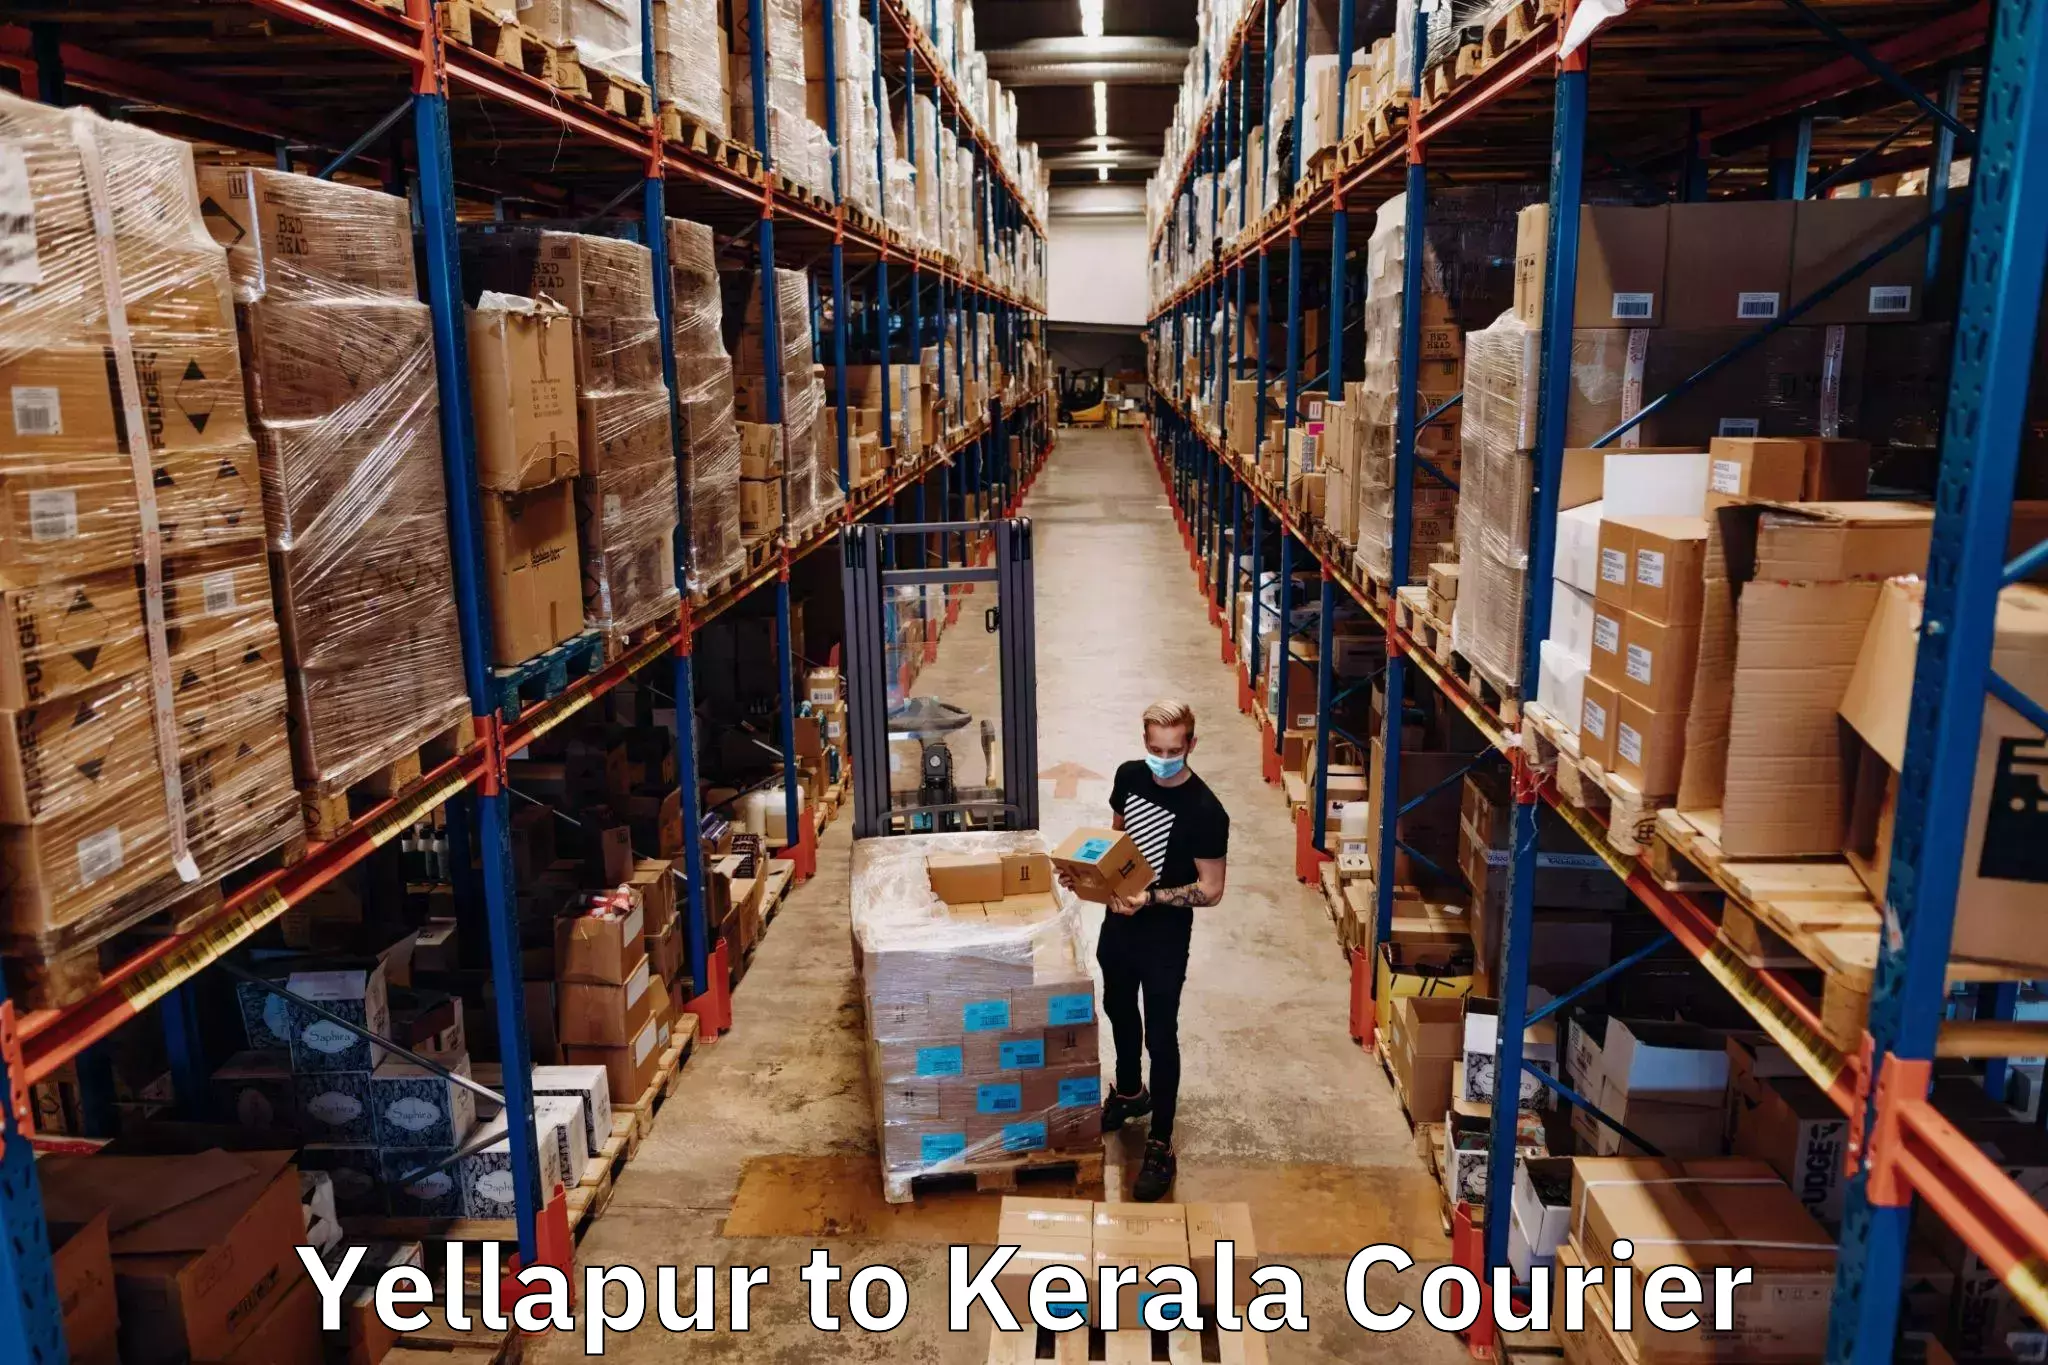 Efficient shipping platforms Yellapur to Cochin Port Kochi